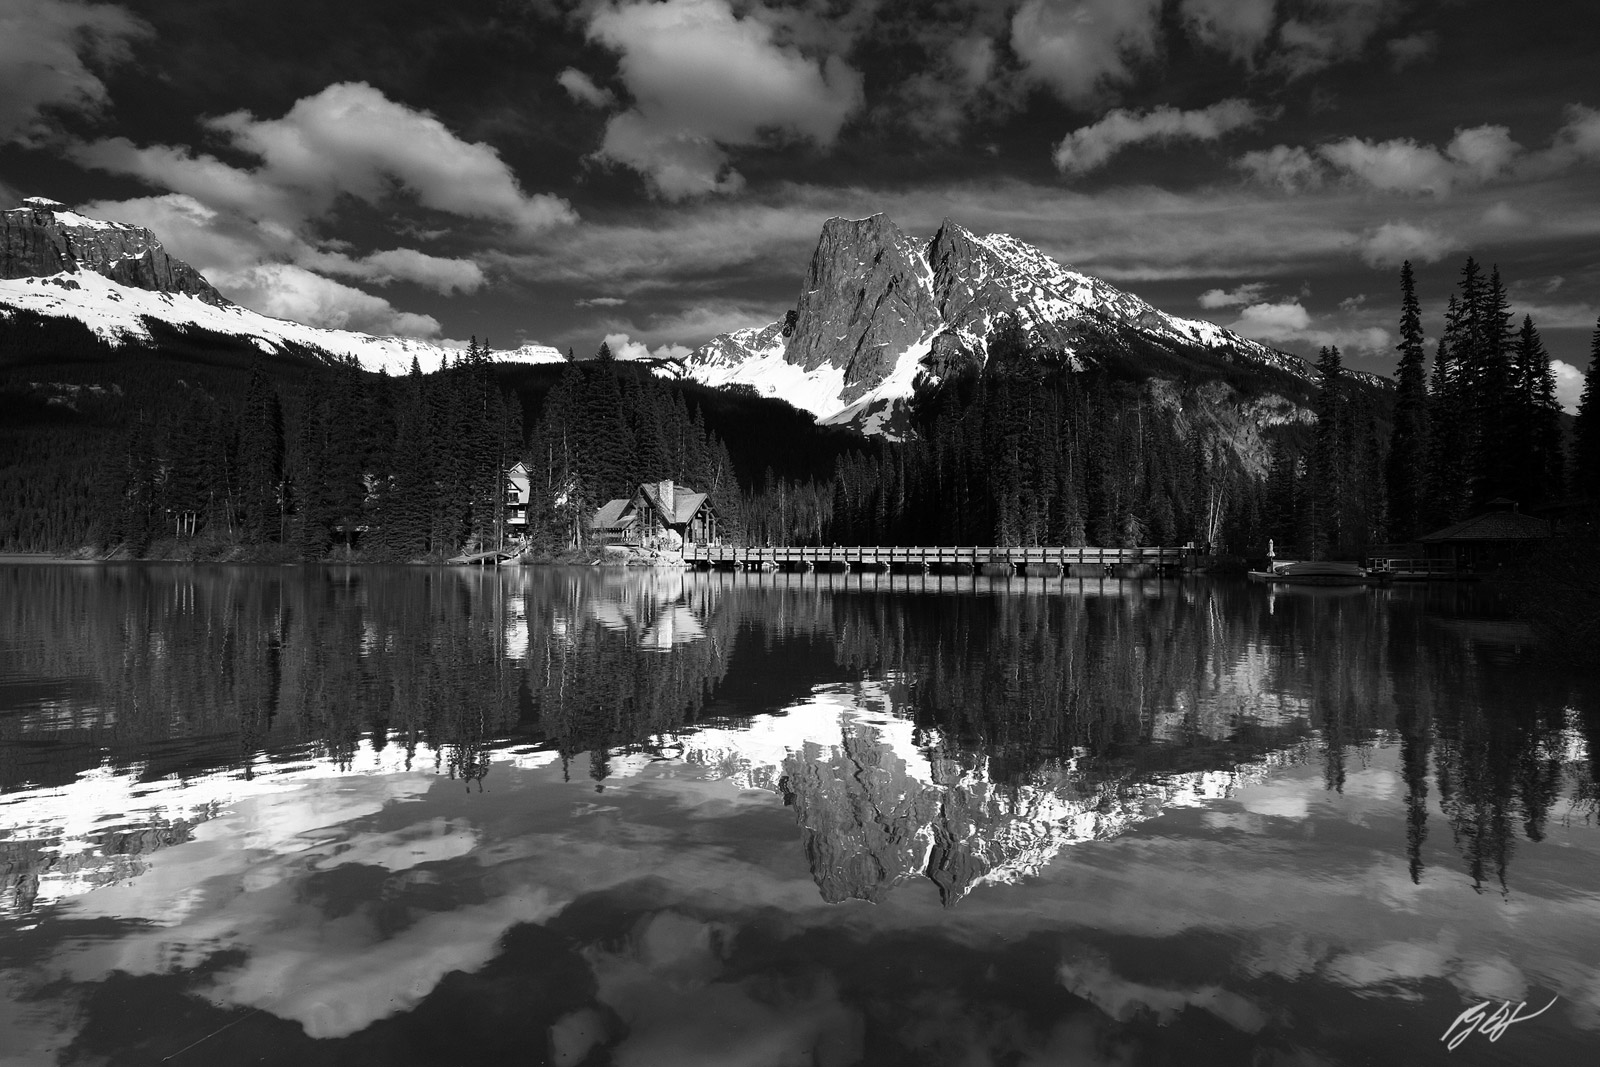 Wapta Peak and Emerald Lake Lodge Reflected in Emerald Lake in Yoho National Park in British Columbia, Canada